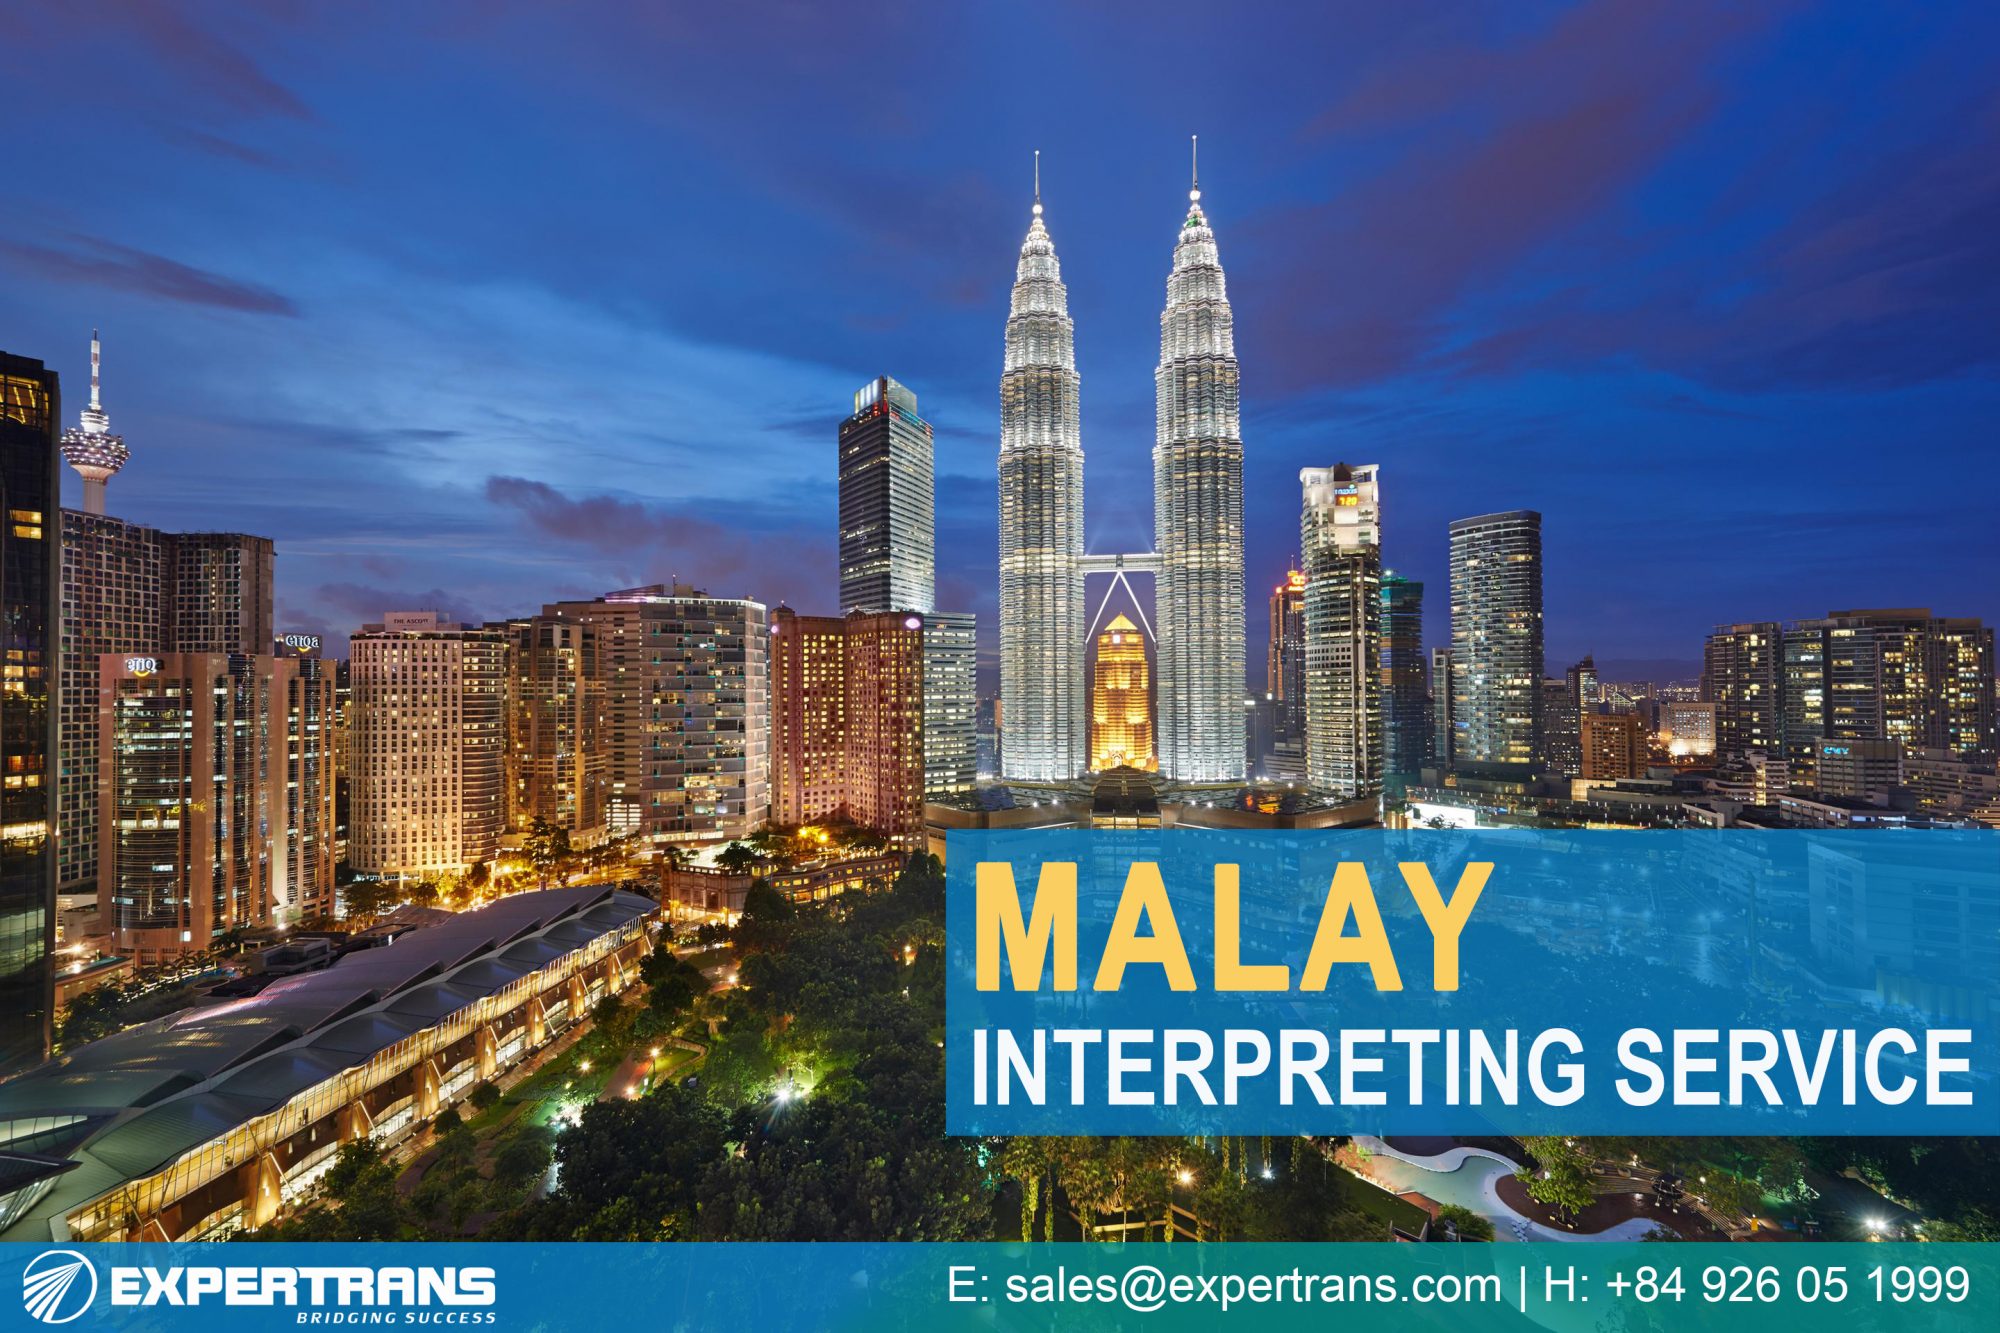 Malay Interpreting Service